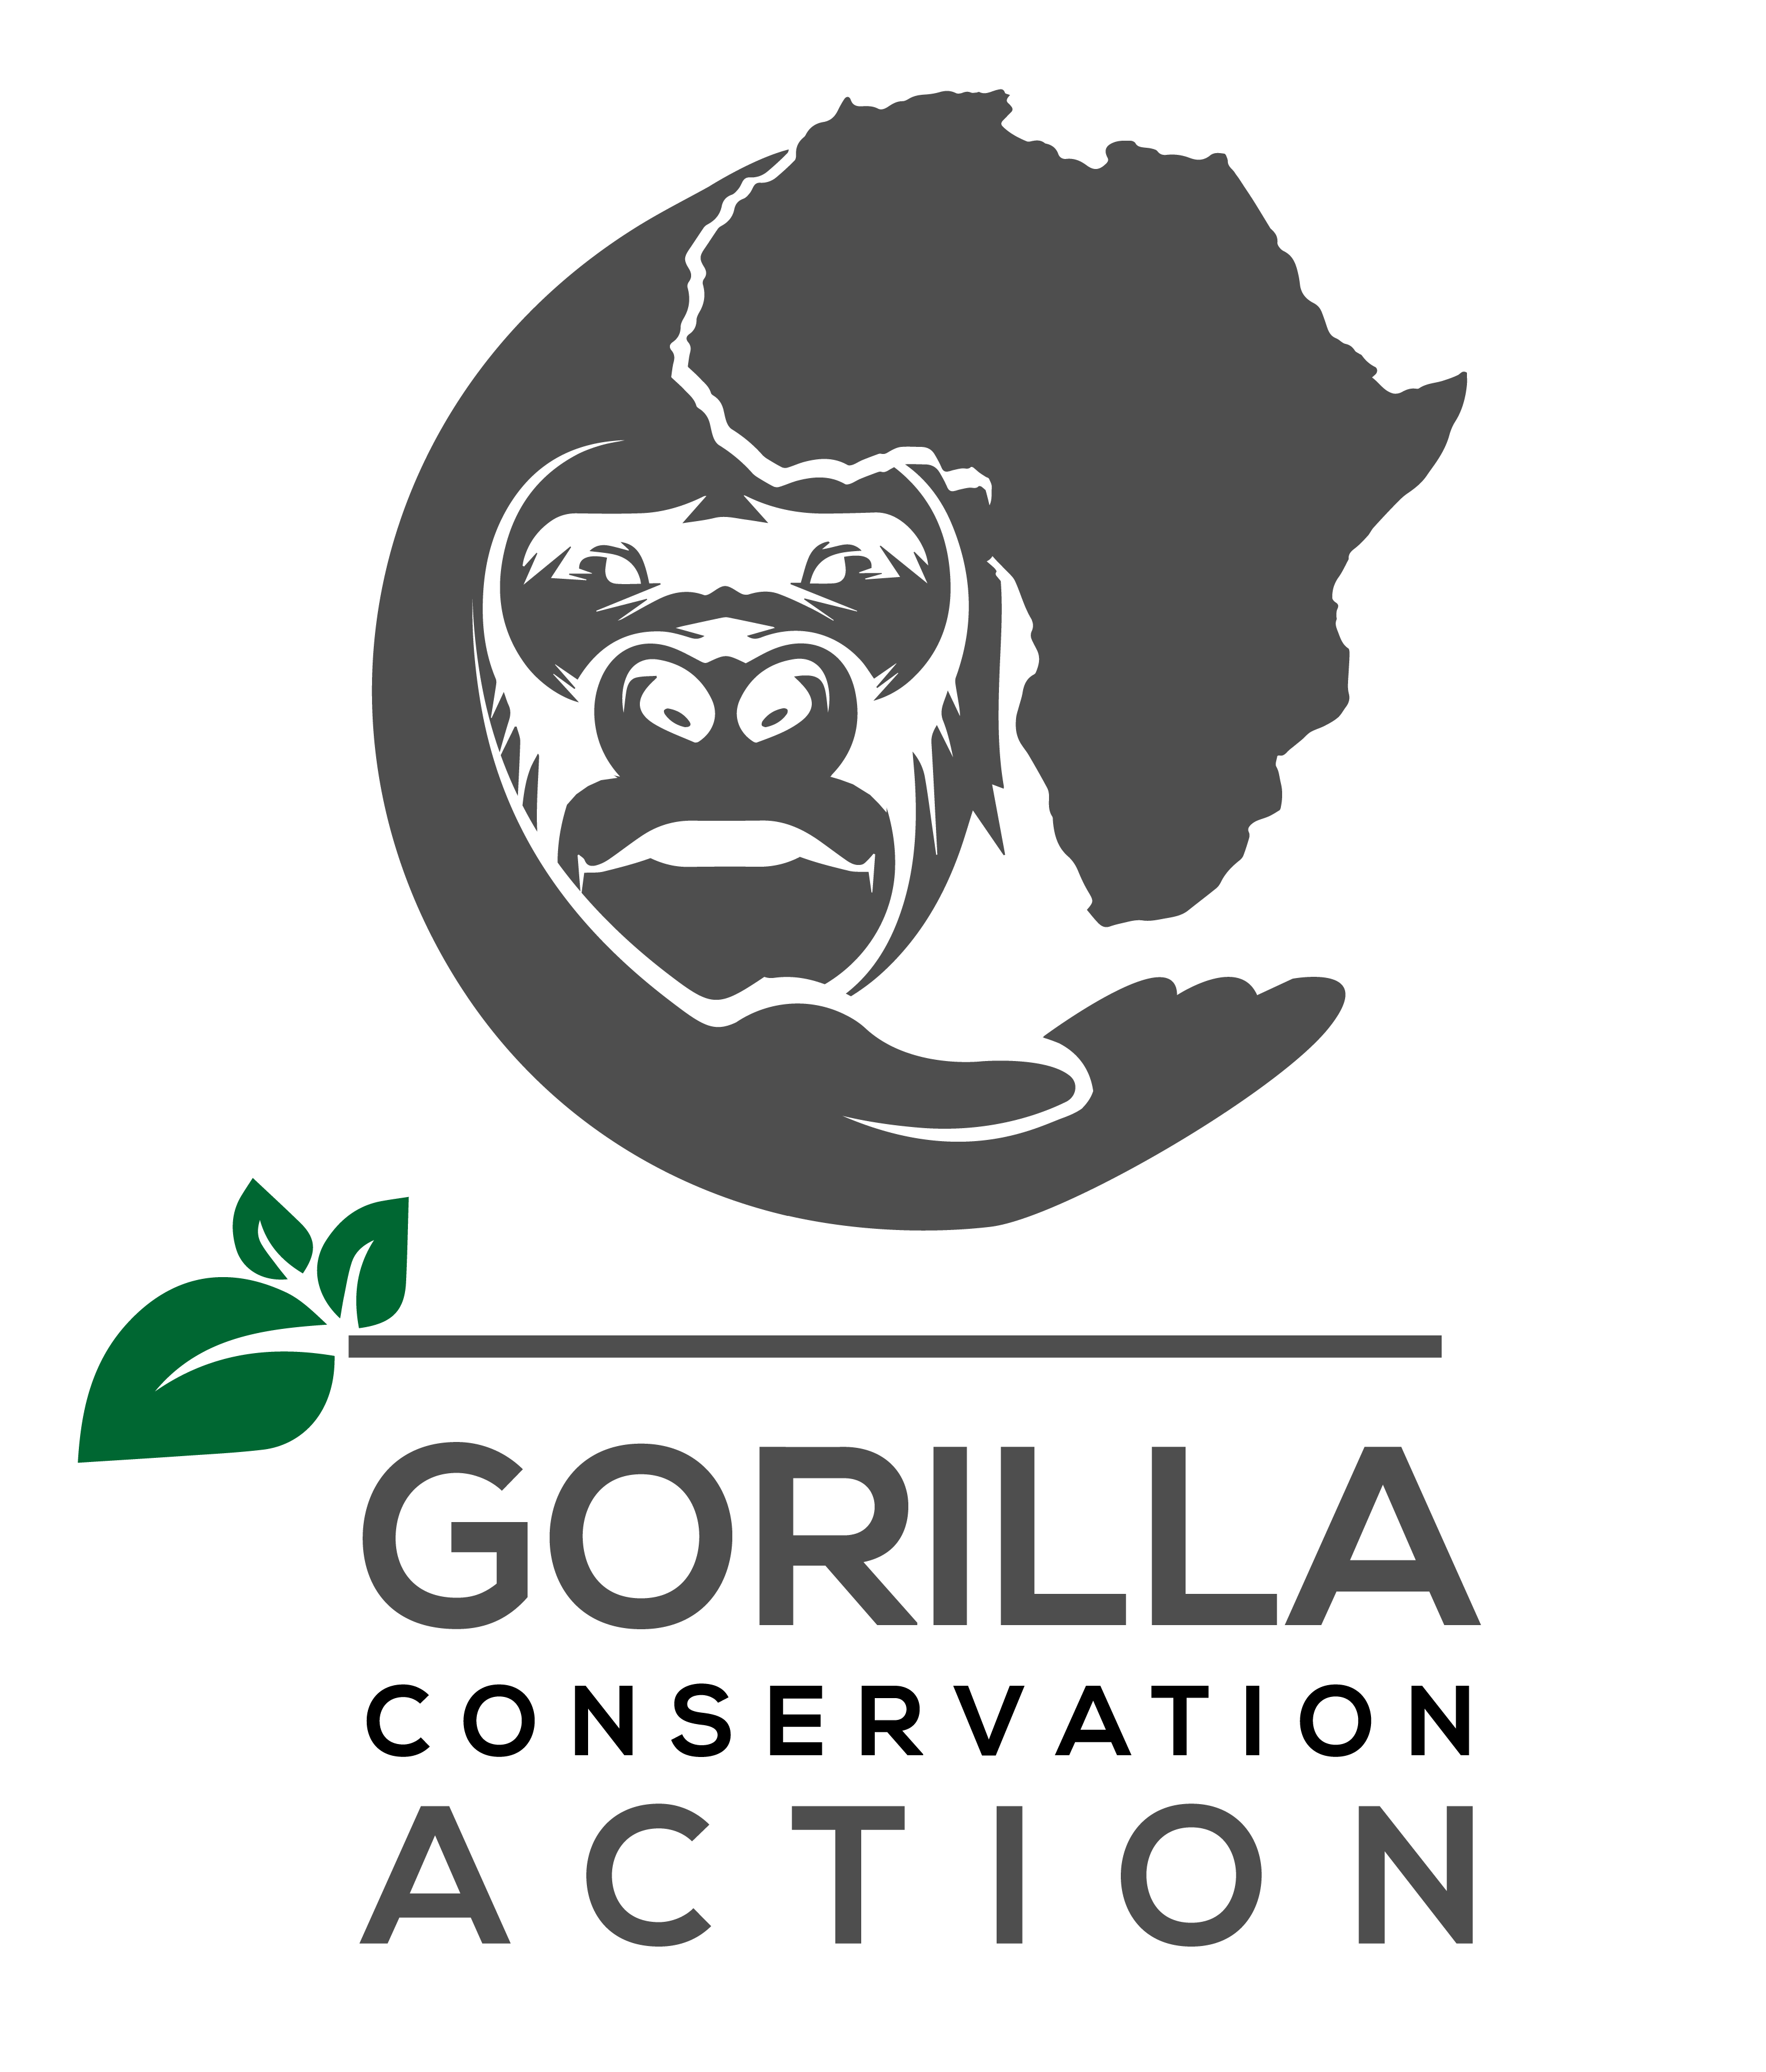 Gorilla Conservation Action logo